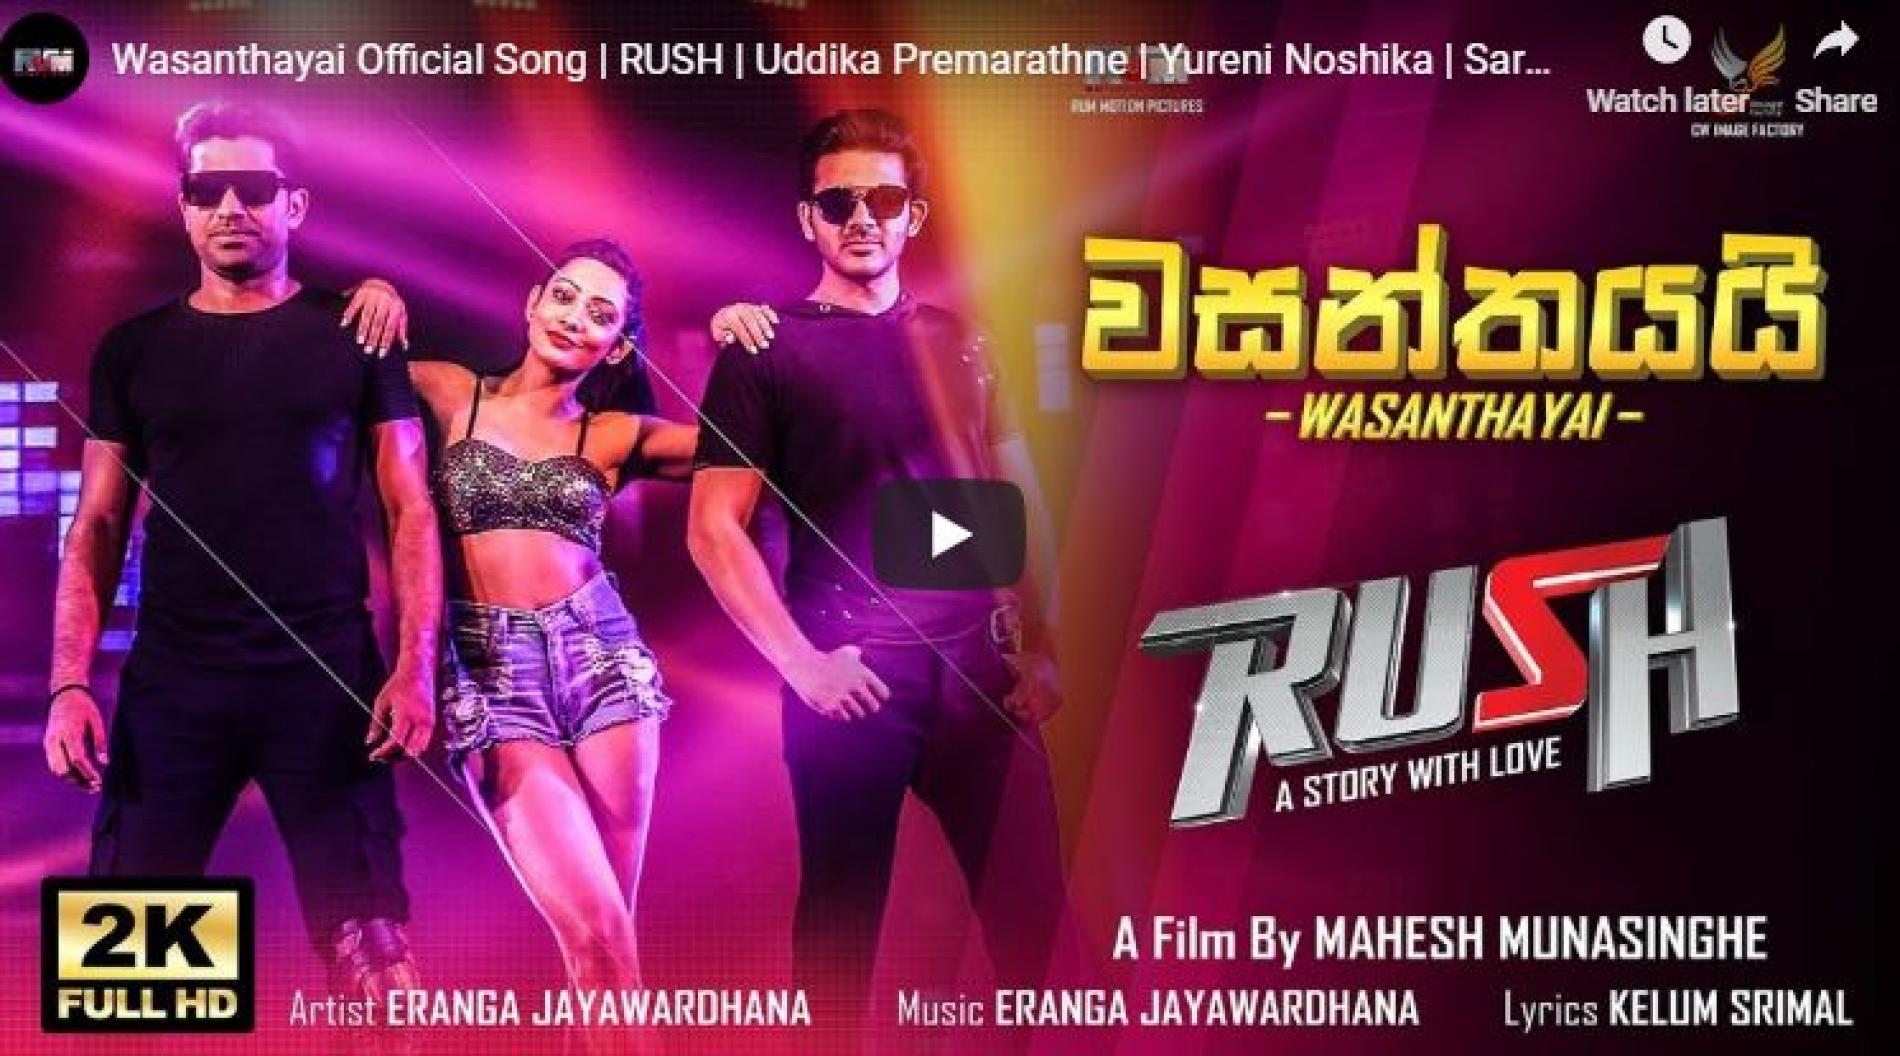 Wasanthayai Official Song | RUSH | Uddika Premarathne | Yureni Noshika | Saranga Disasekara